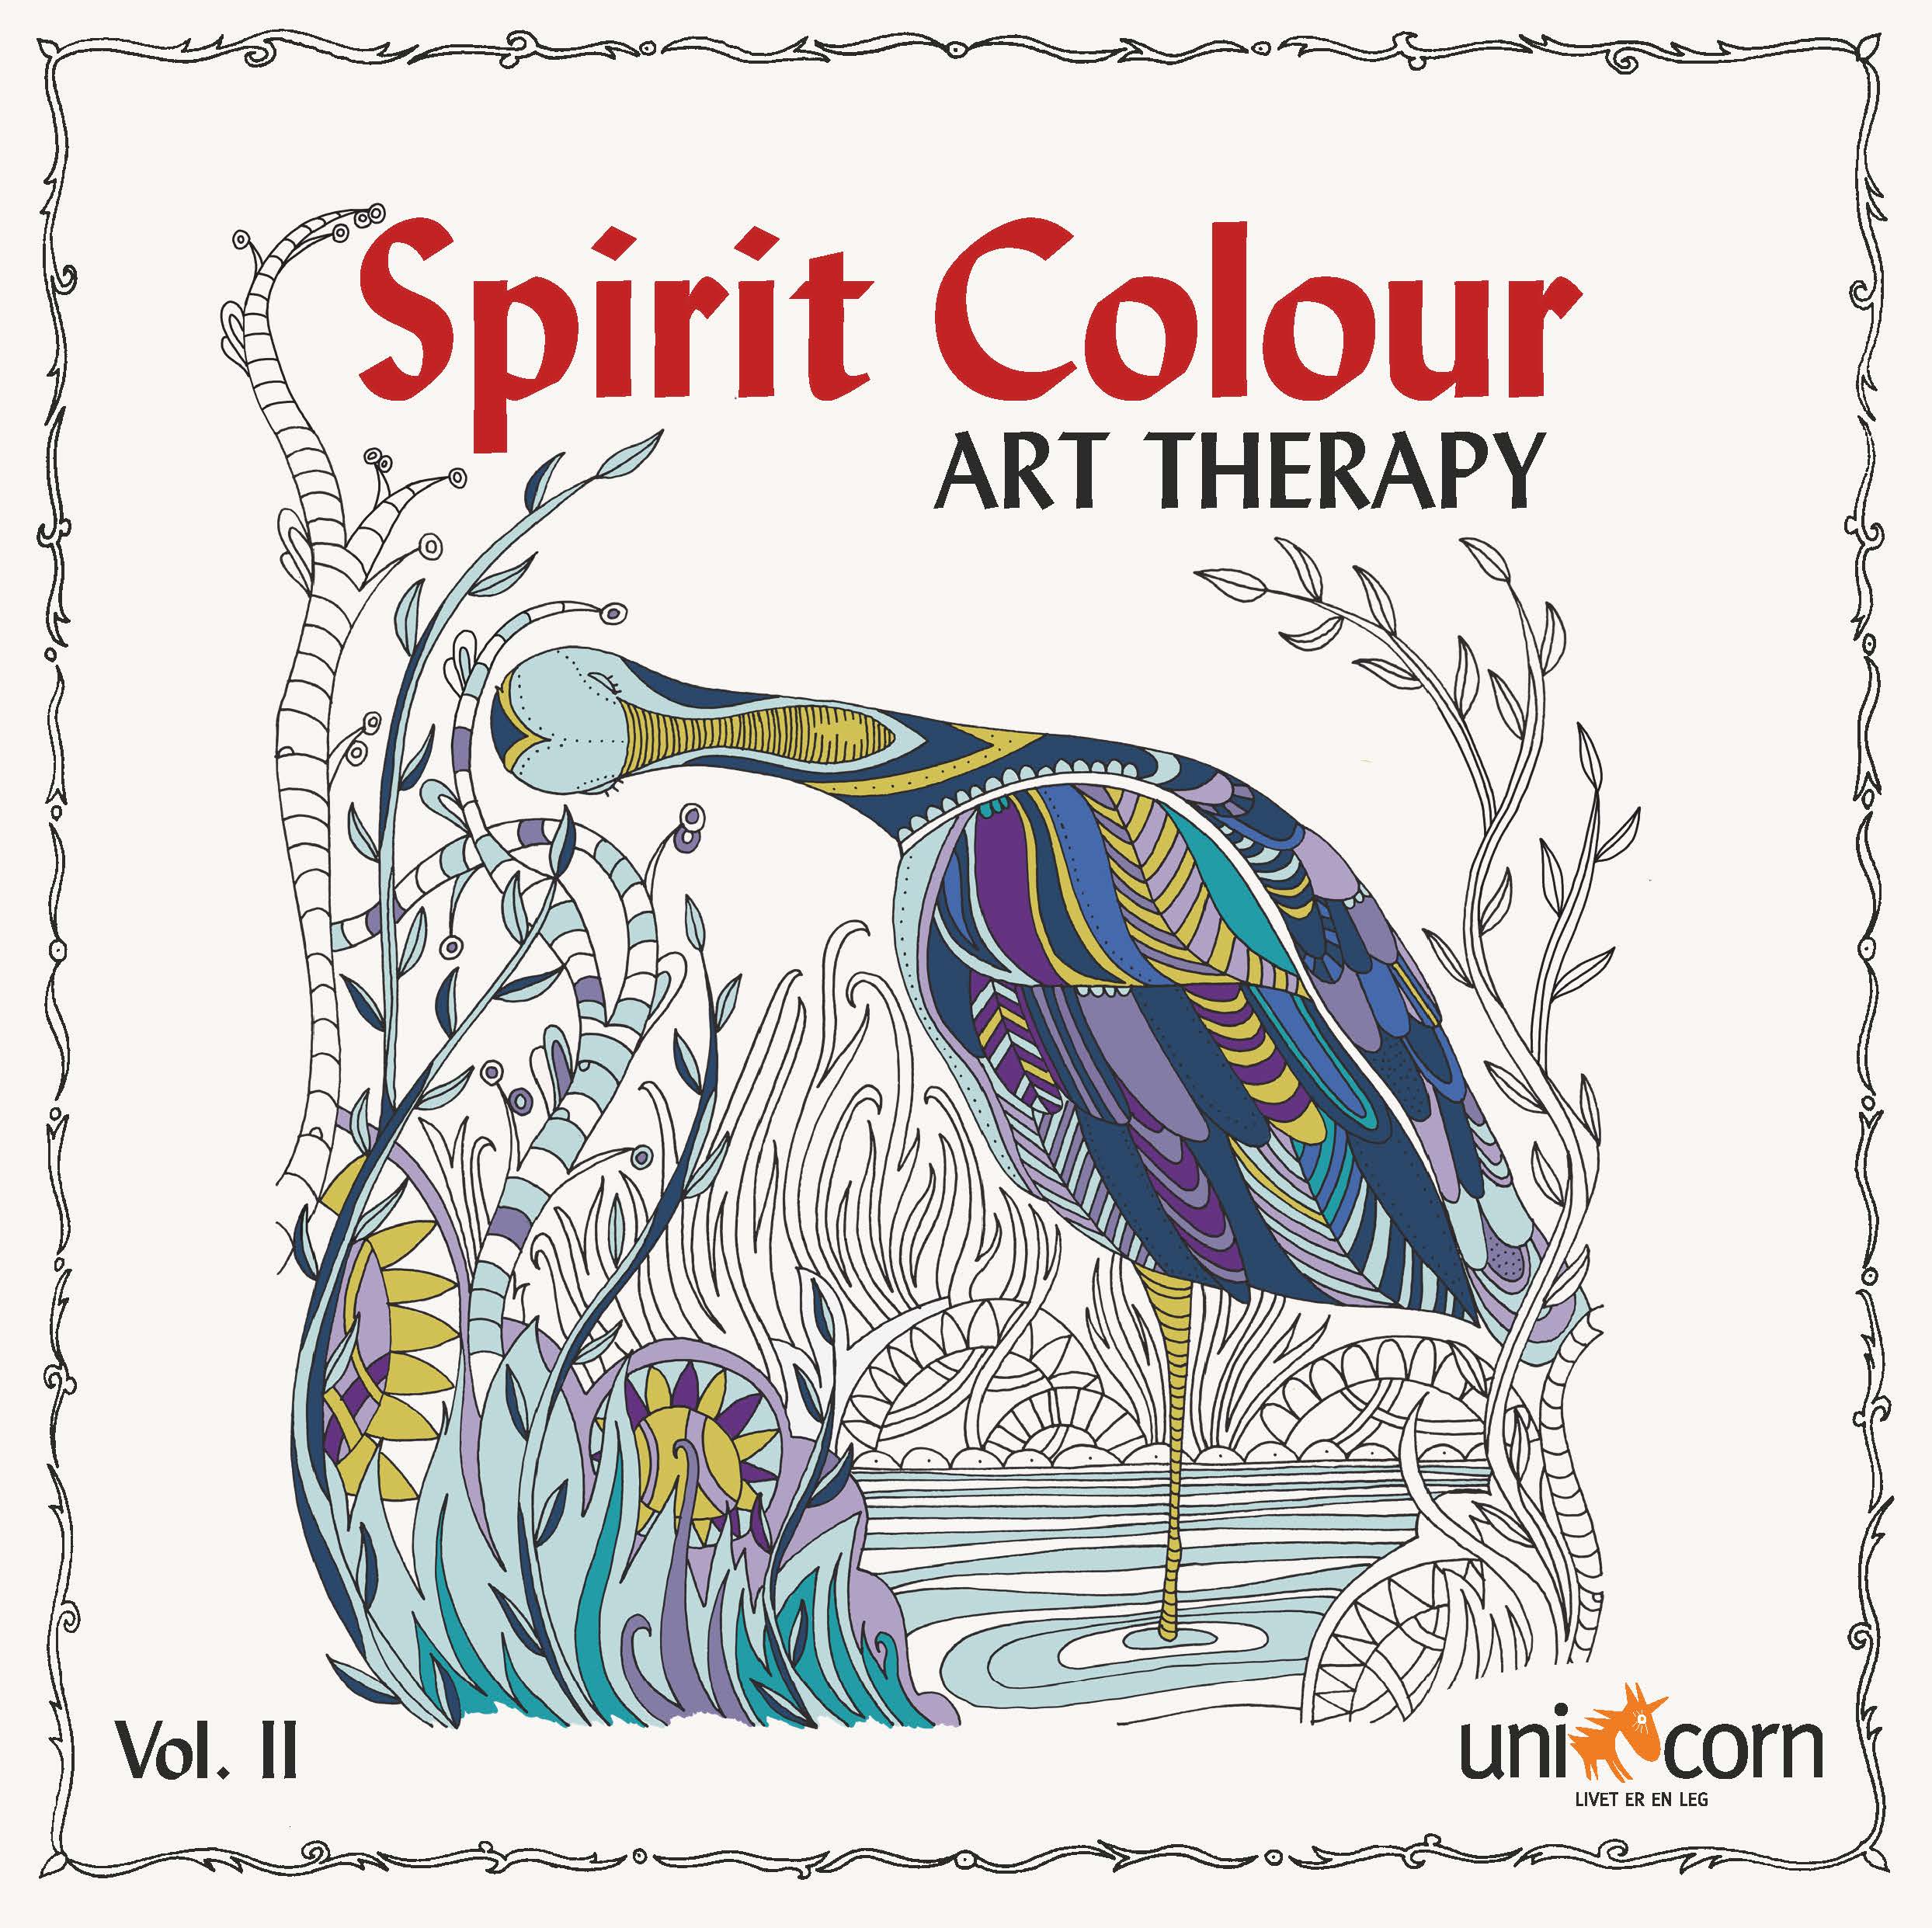 Mandalas - Spirit Colour Art Therapy Vol. II (104932) - Leker